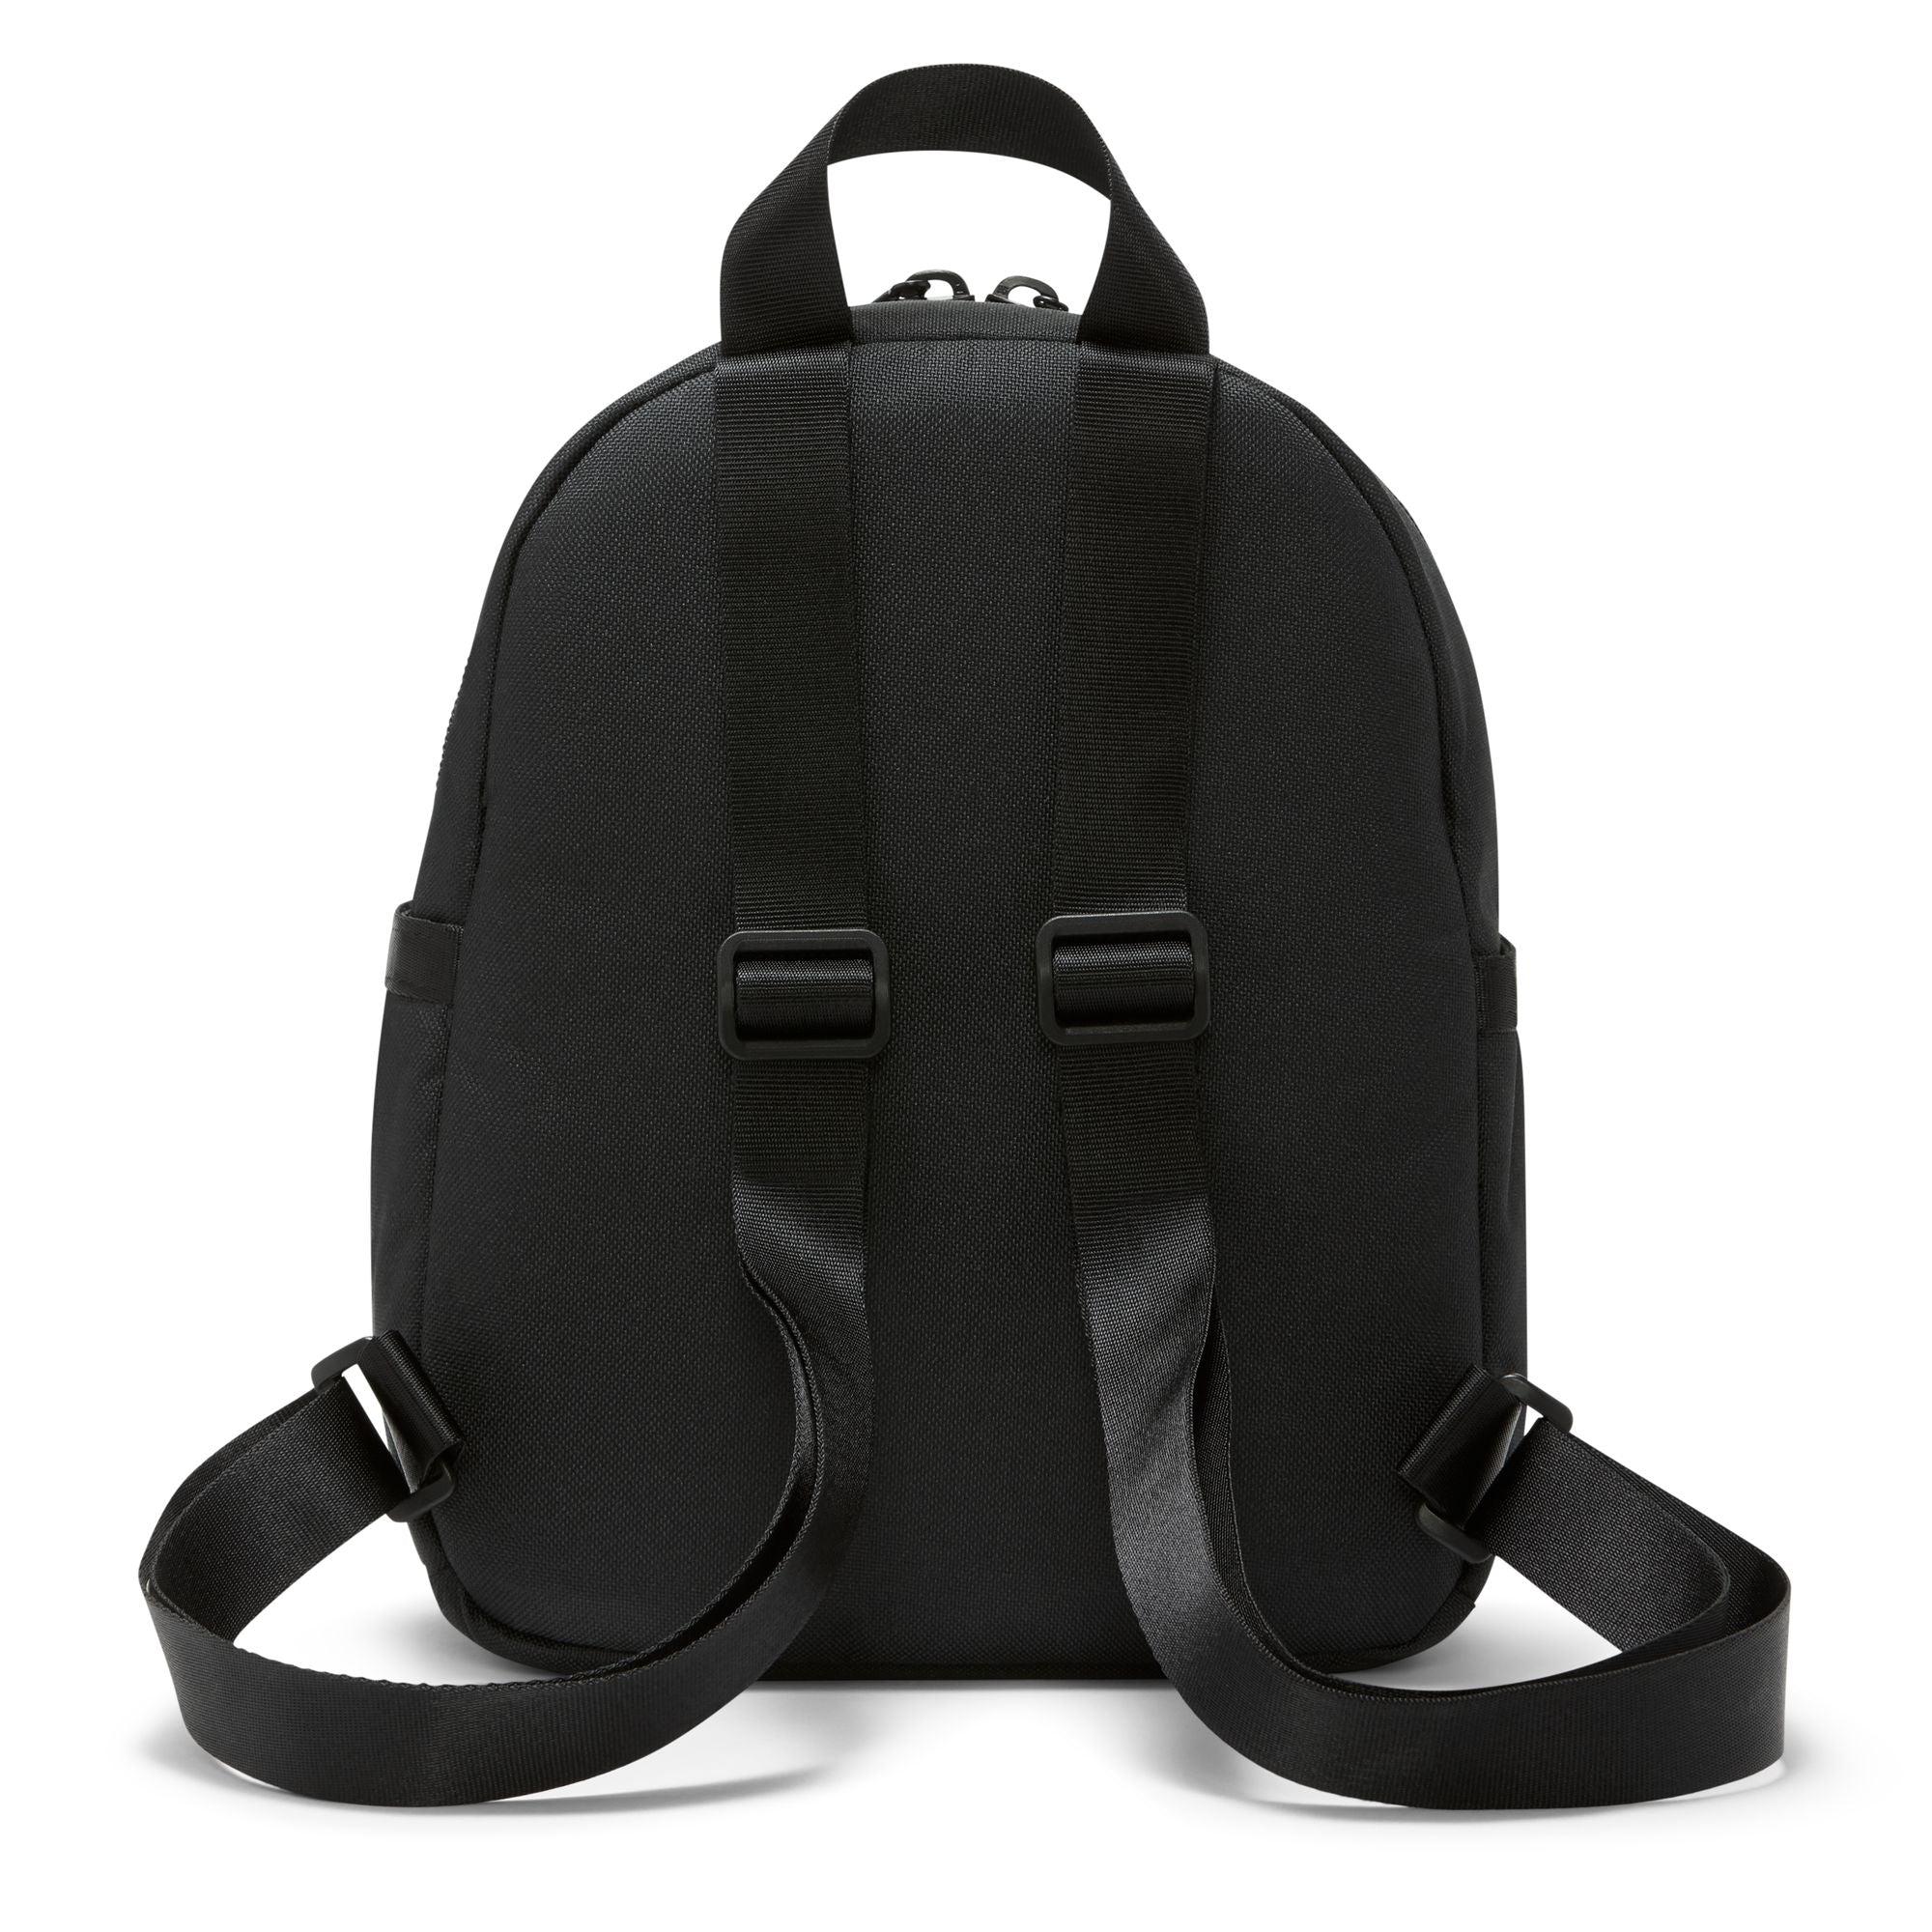 NSW Futura 365 Backpack